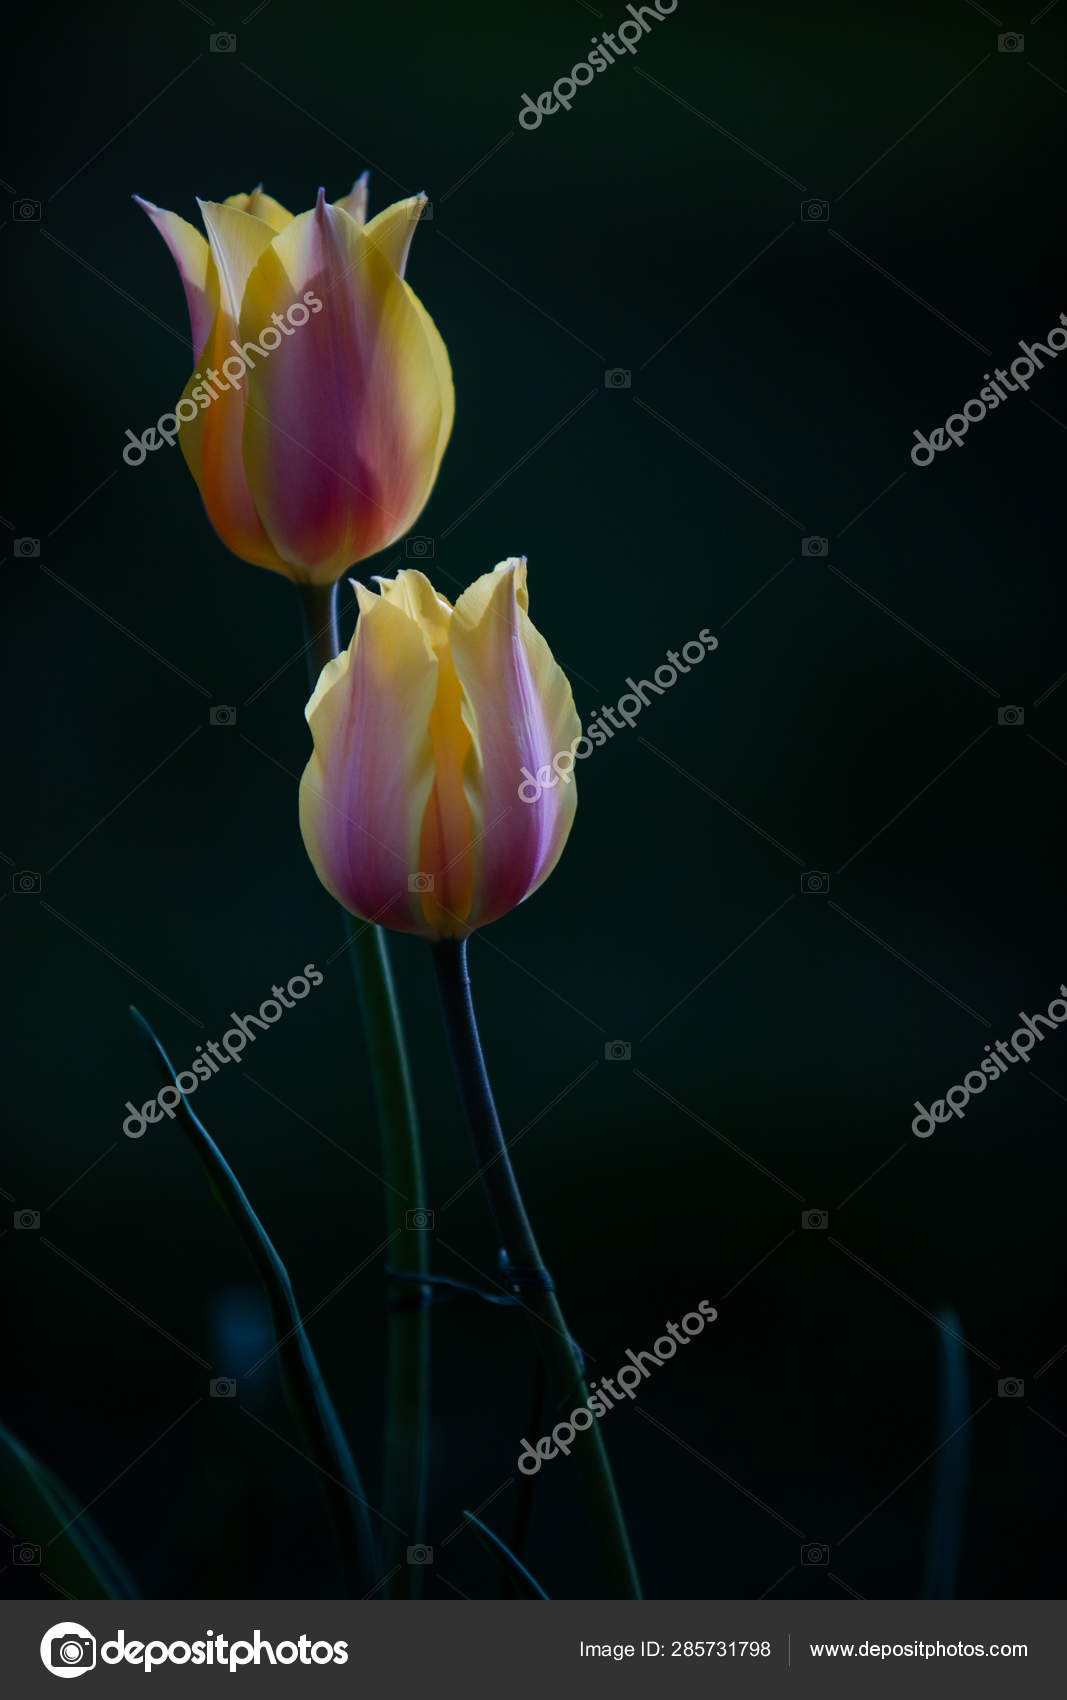 Tulip Flower Black Background Stock Photo C Imaginechina Tuchong 285731798